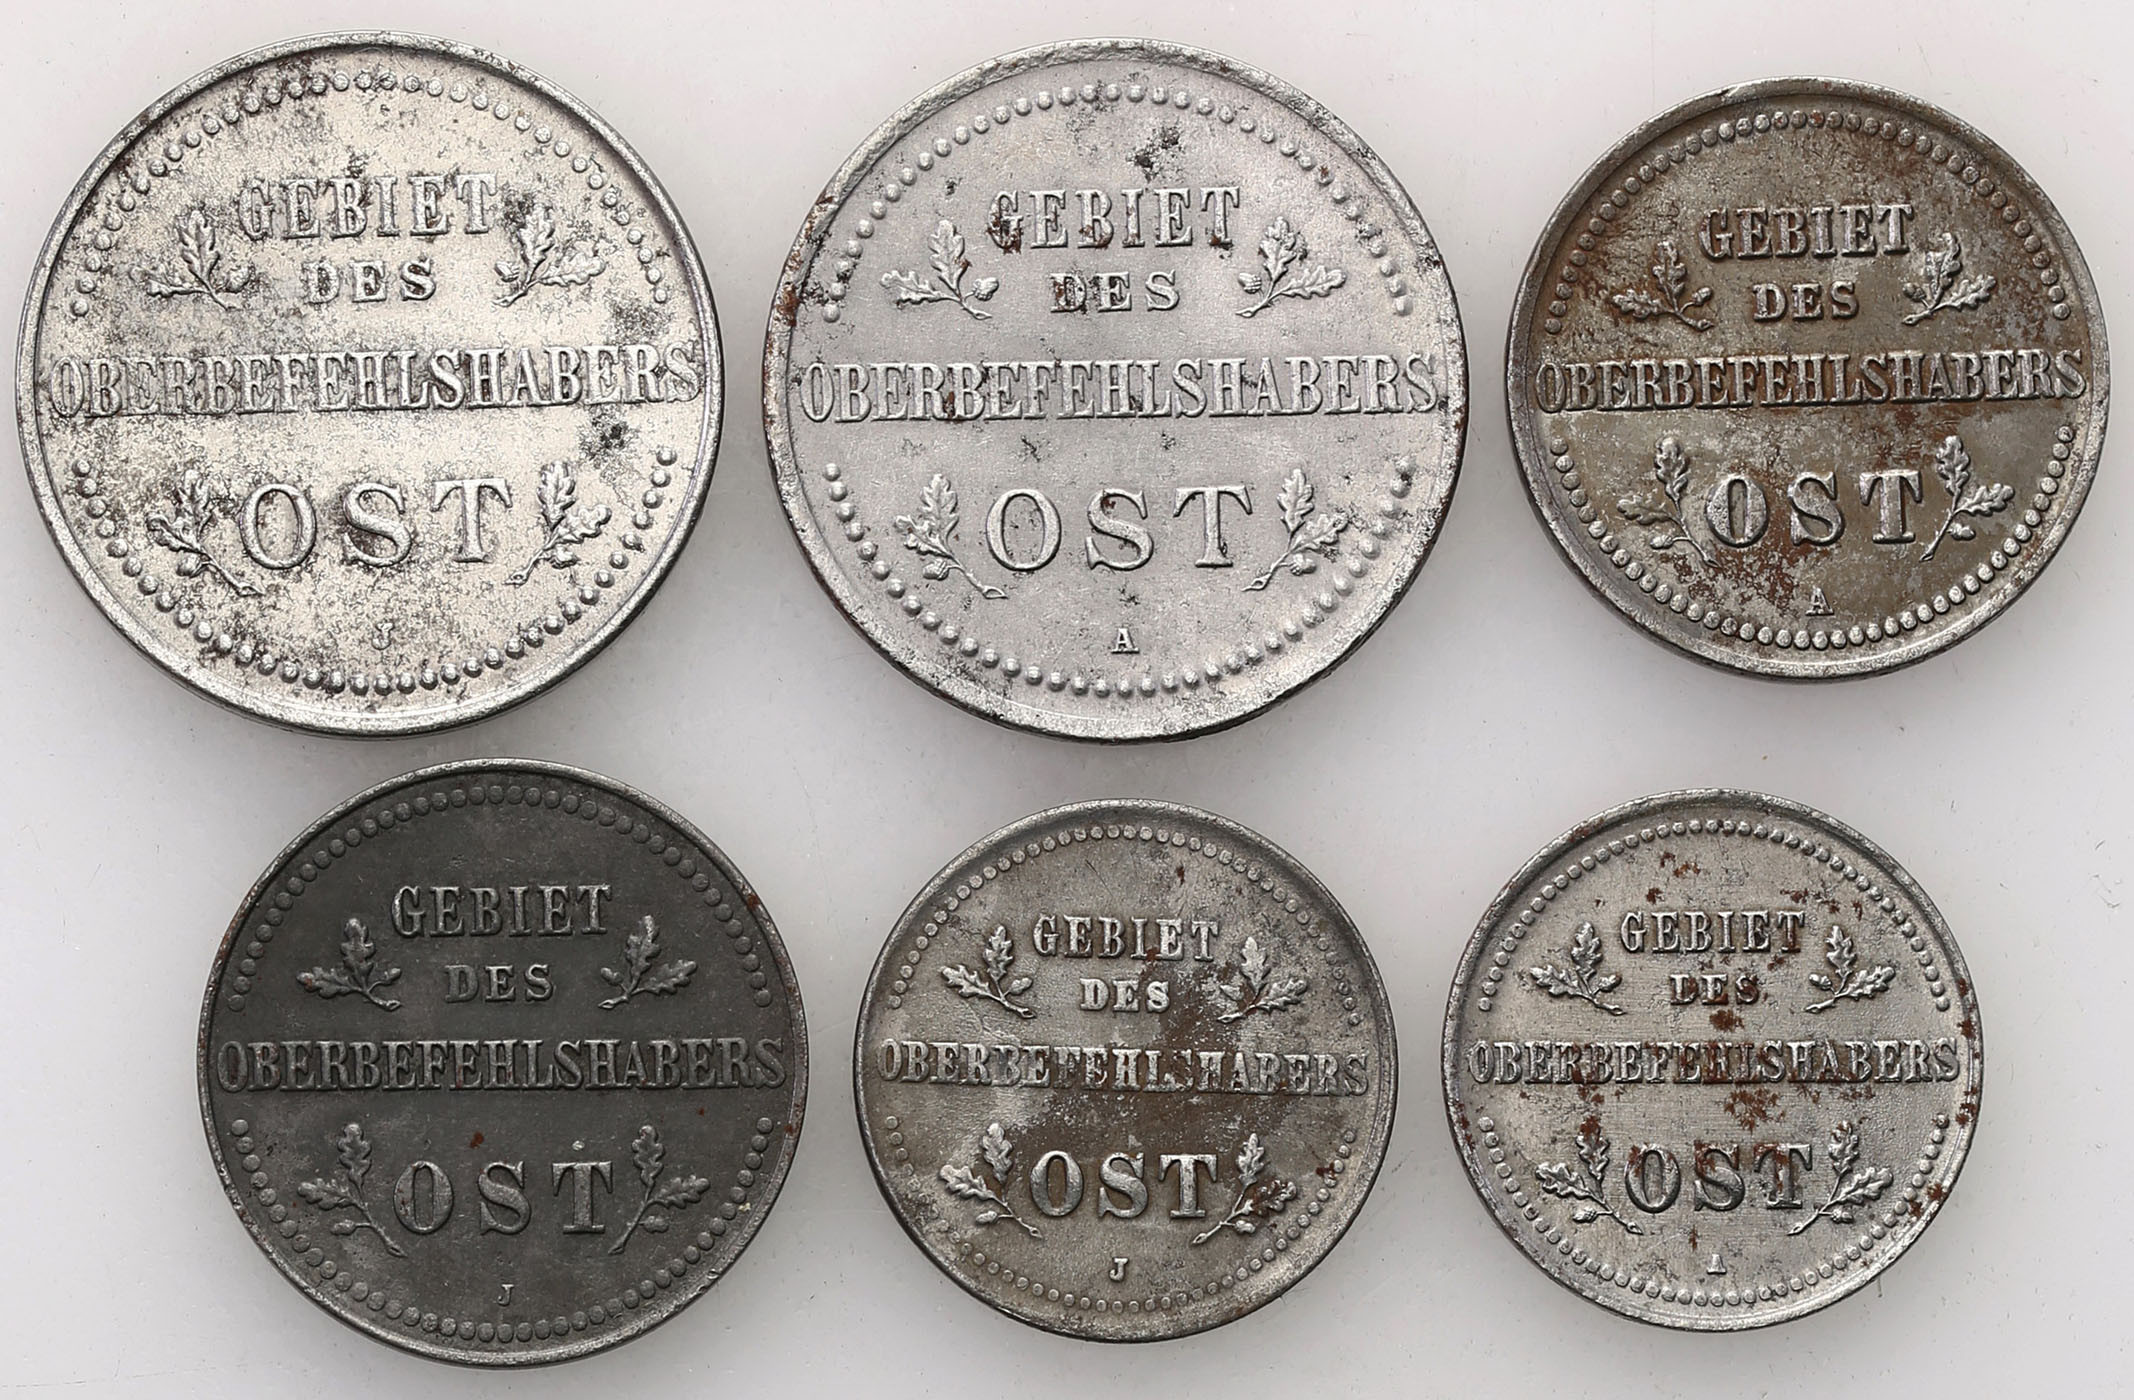 Polska - OST. 1, 2, 3, kopiejki 1916, zestaw 6 monet